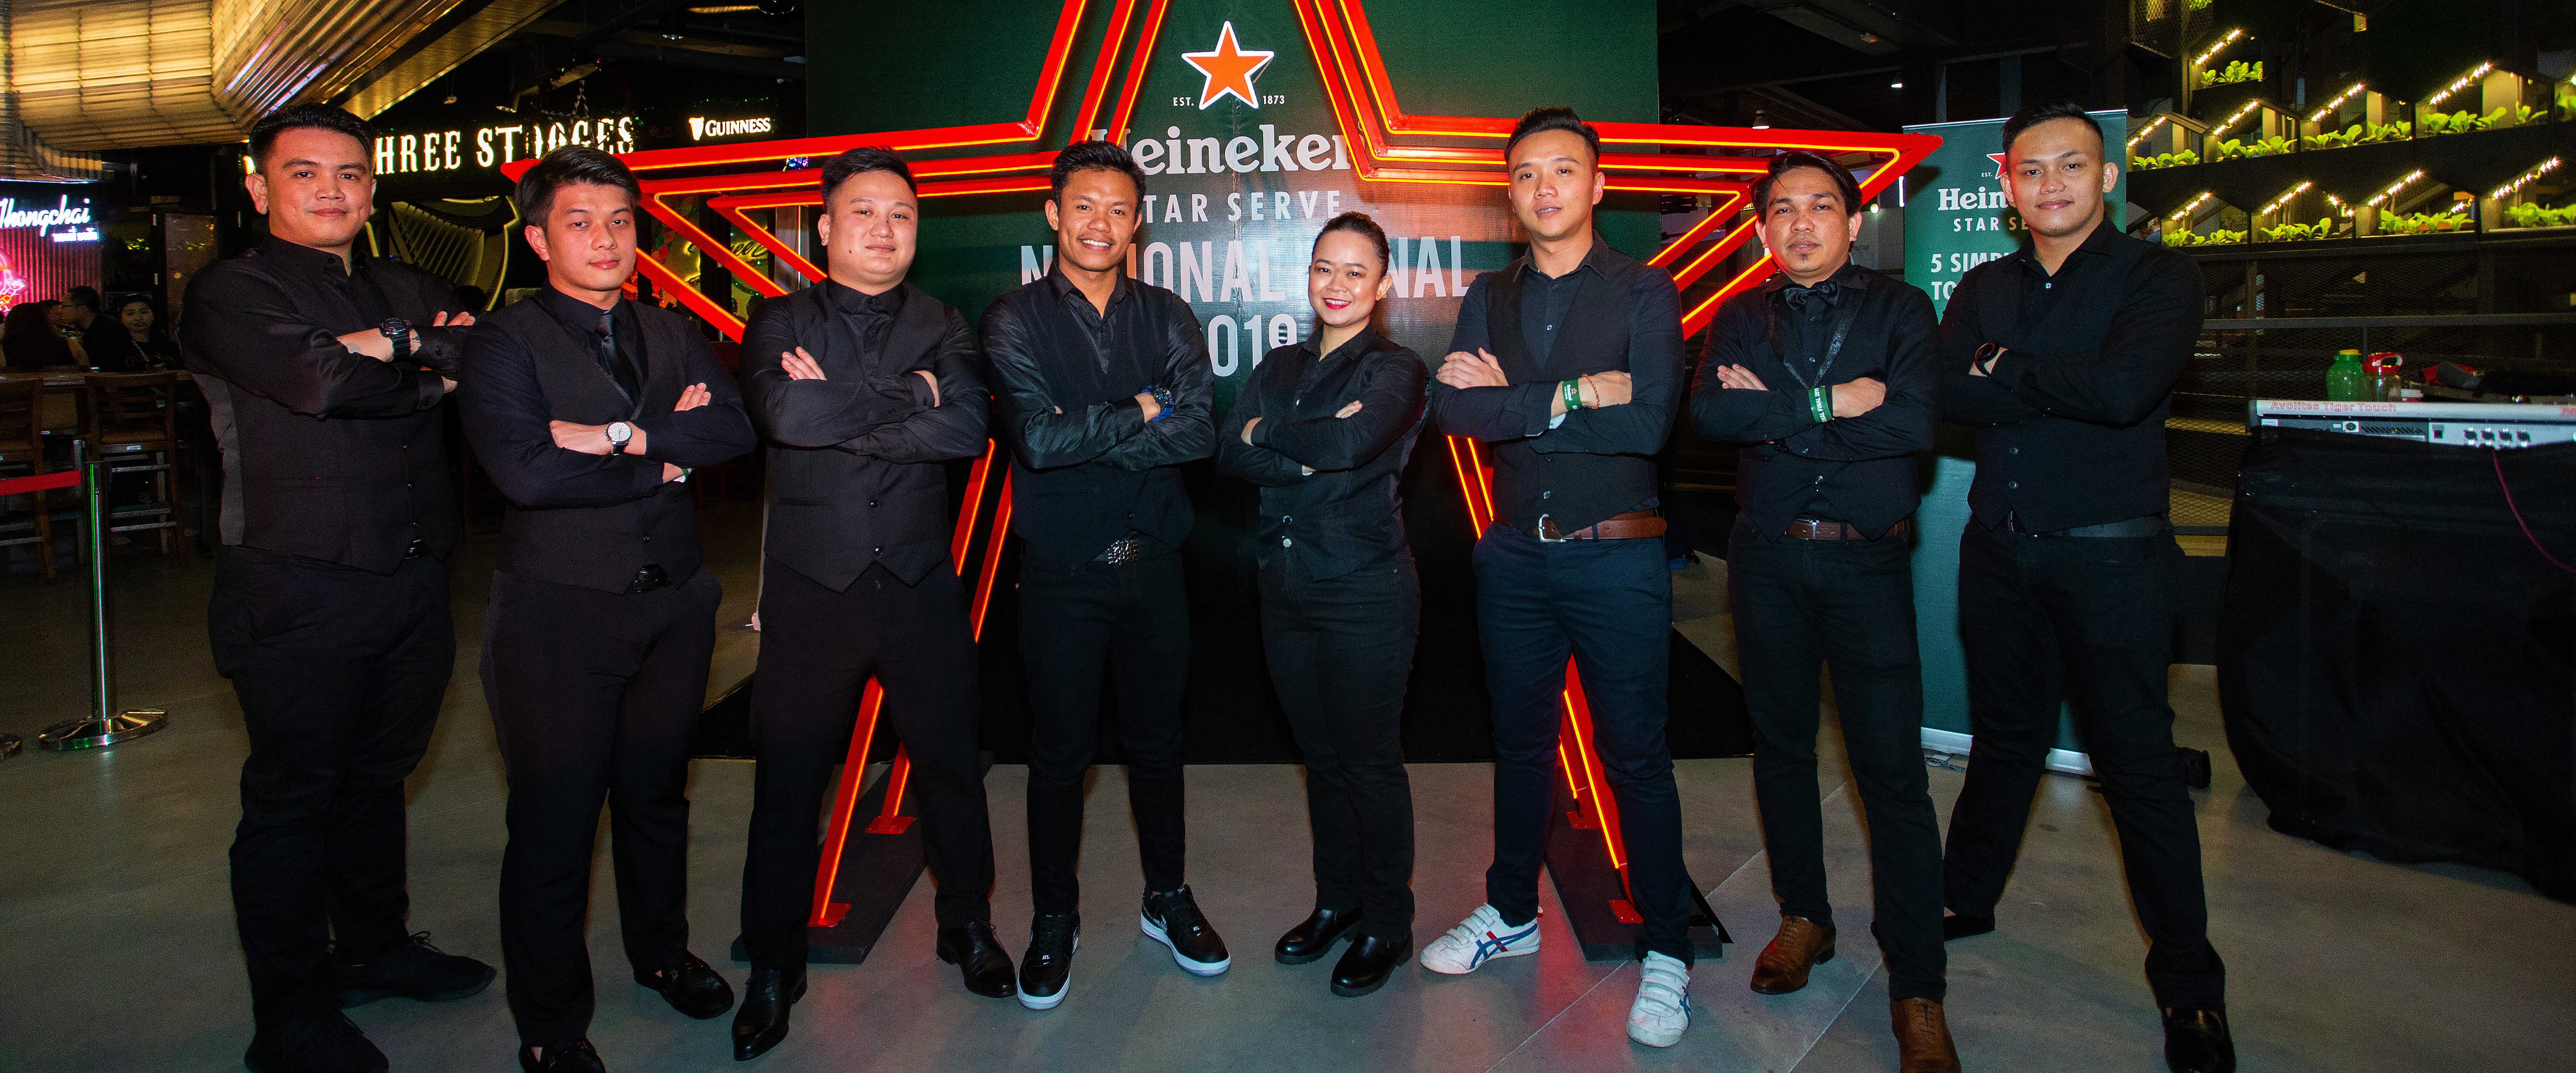 Heineken Star Serve National Final 2019_02-v3